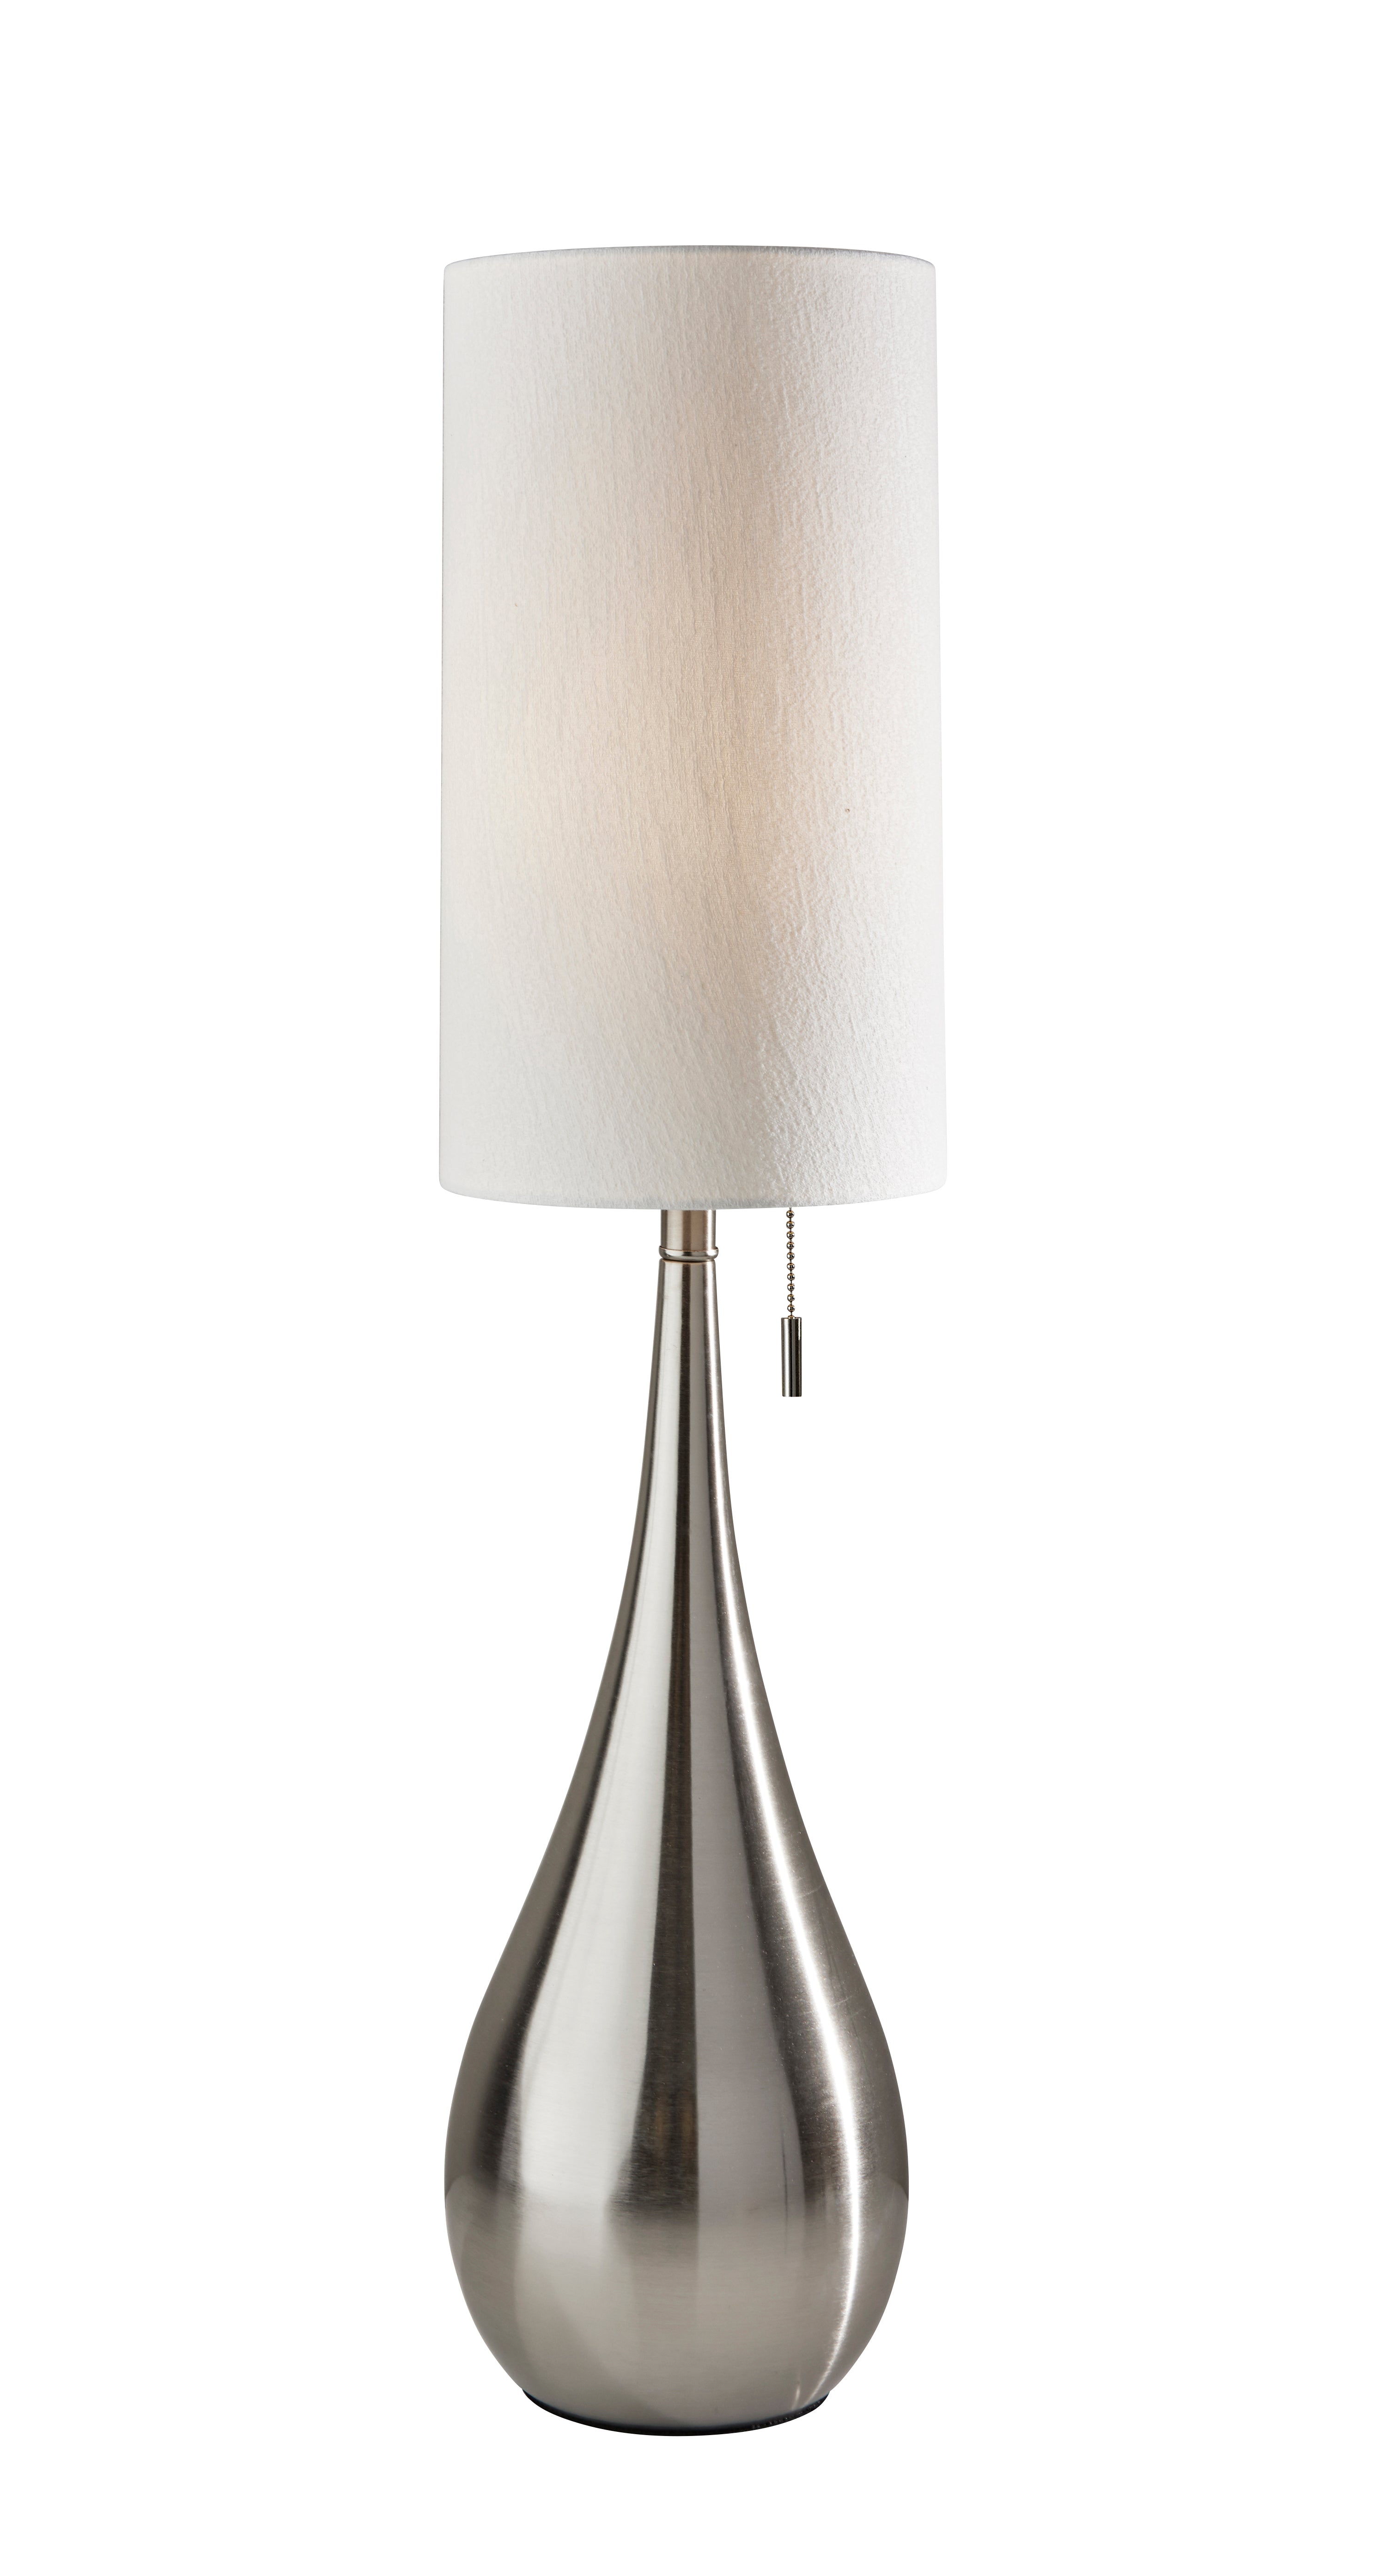 CHRISTINA Lampe sur table Nickel - 1536-22 | ADESSO